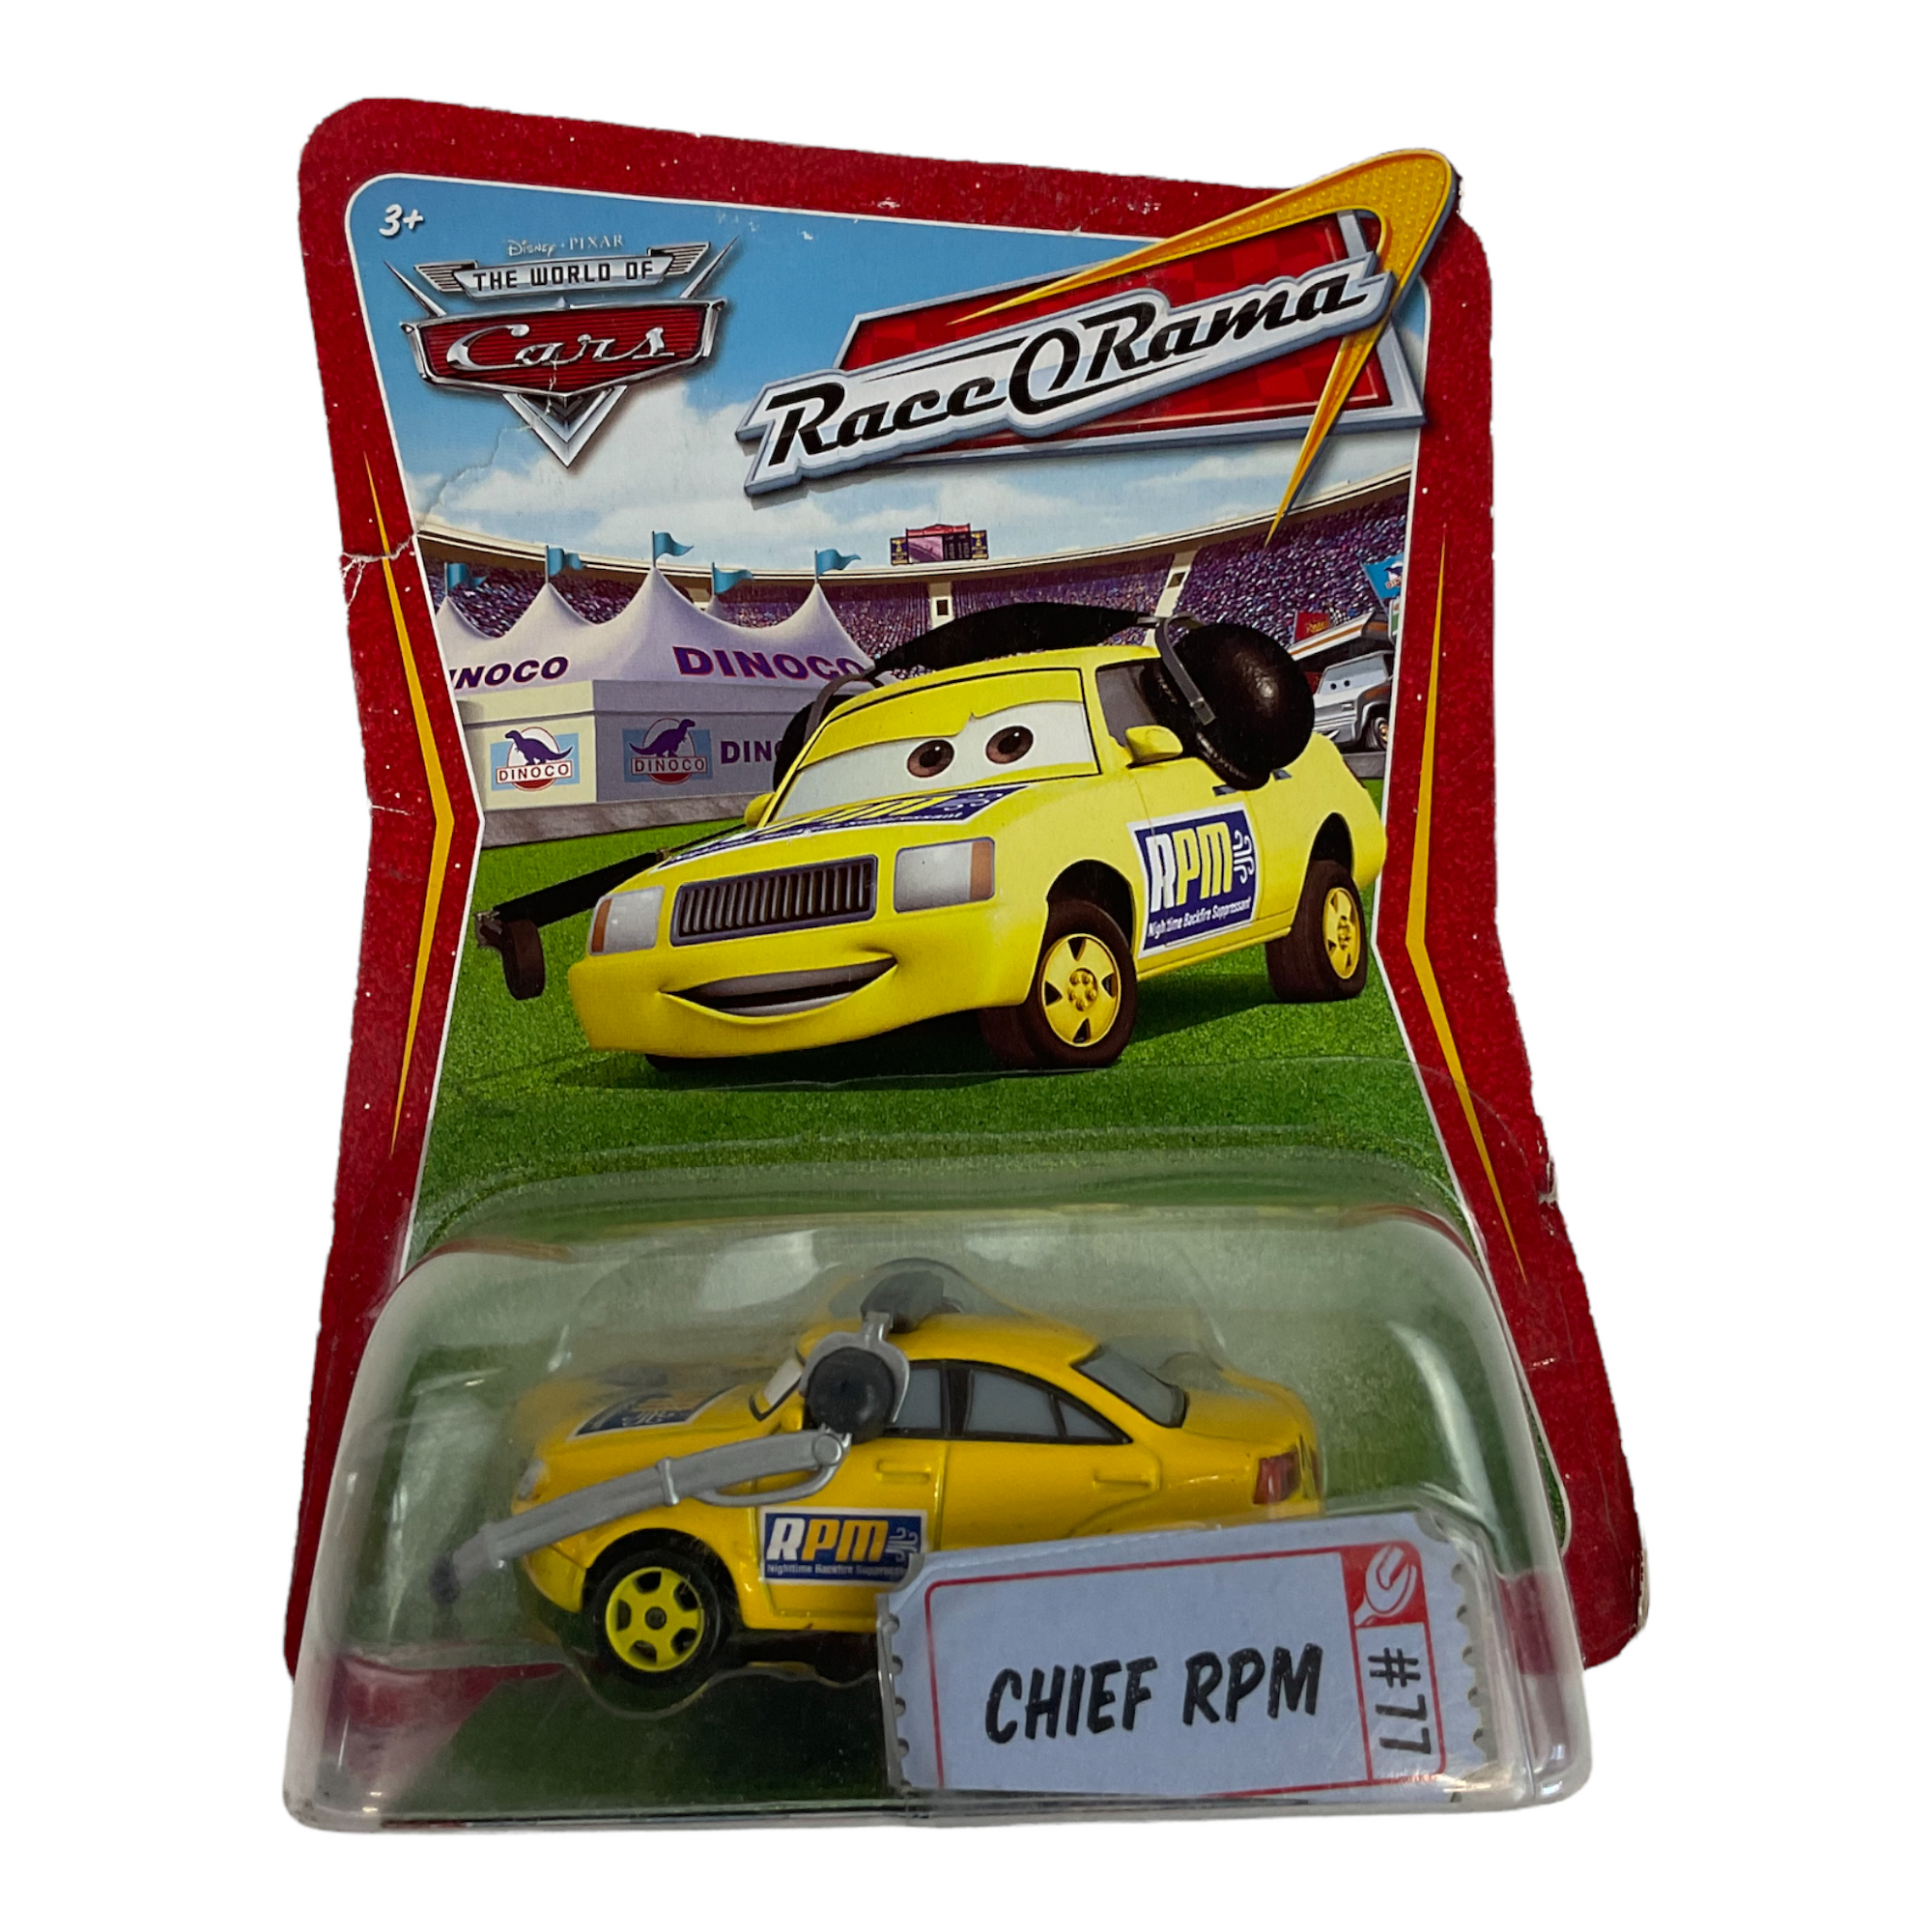 Disney Pixar Cars, Chief RPM Die-Cast Vehicle, 1:55 Scale